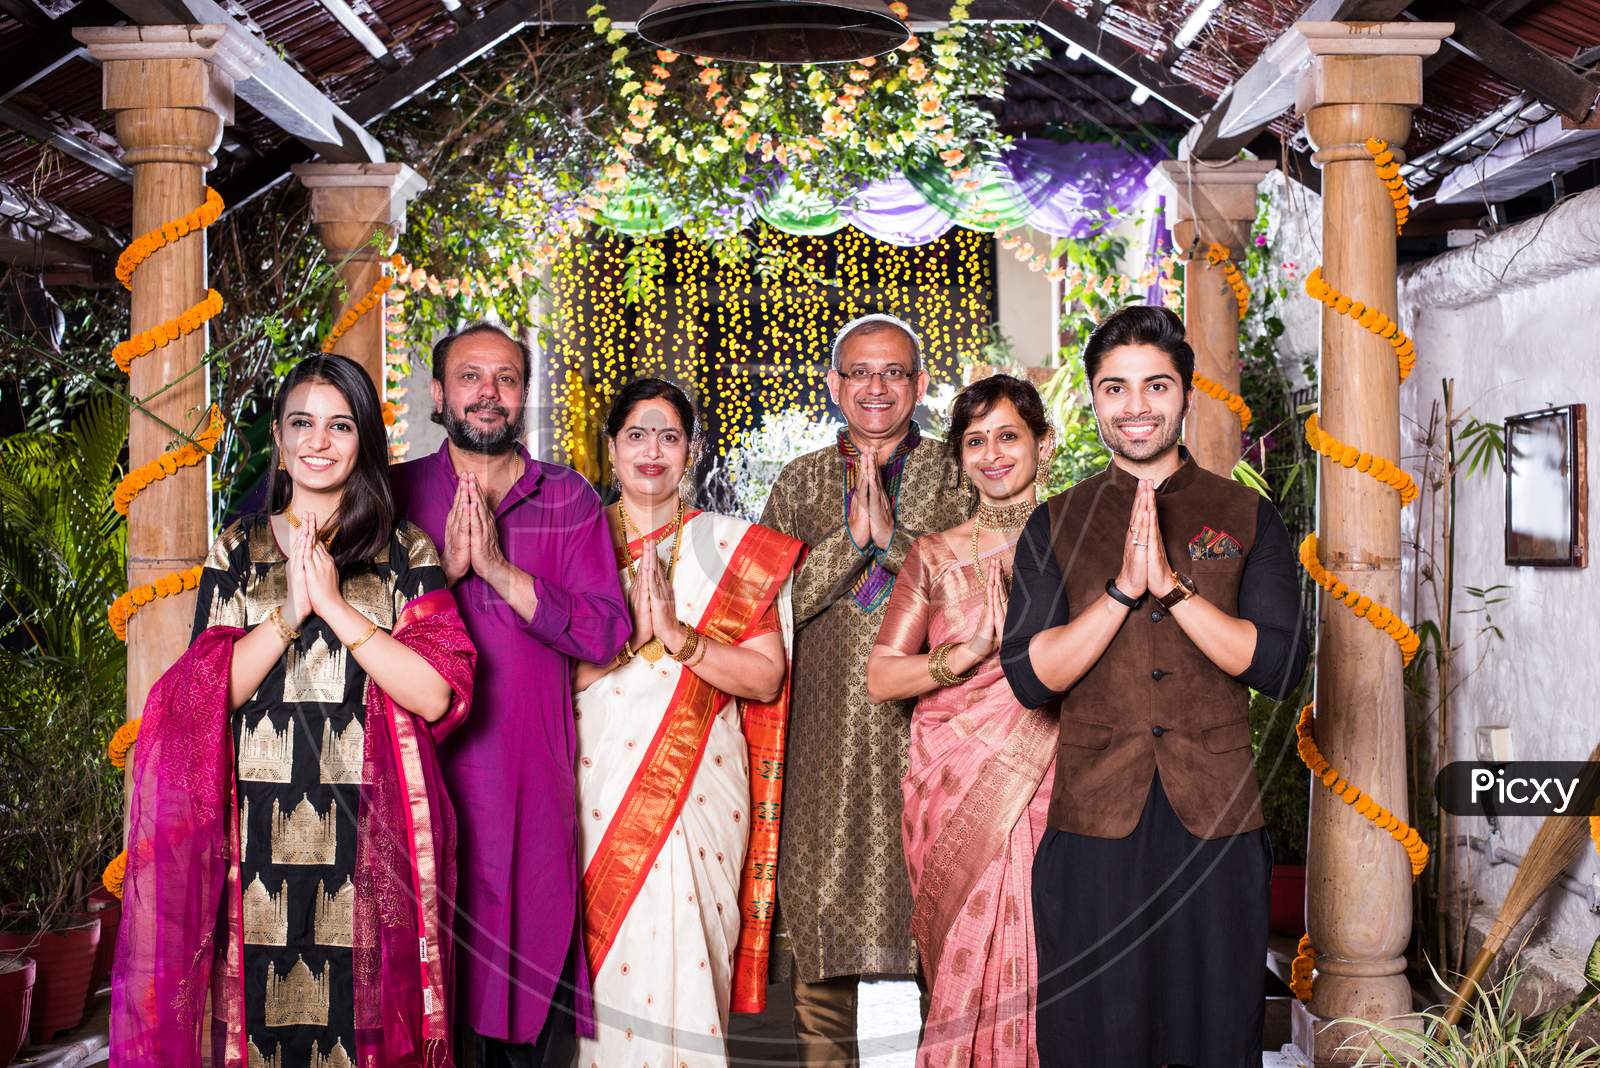 Family welcoming guests or in namaste / namaskara pose while looking at camera in celebration mood